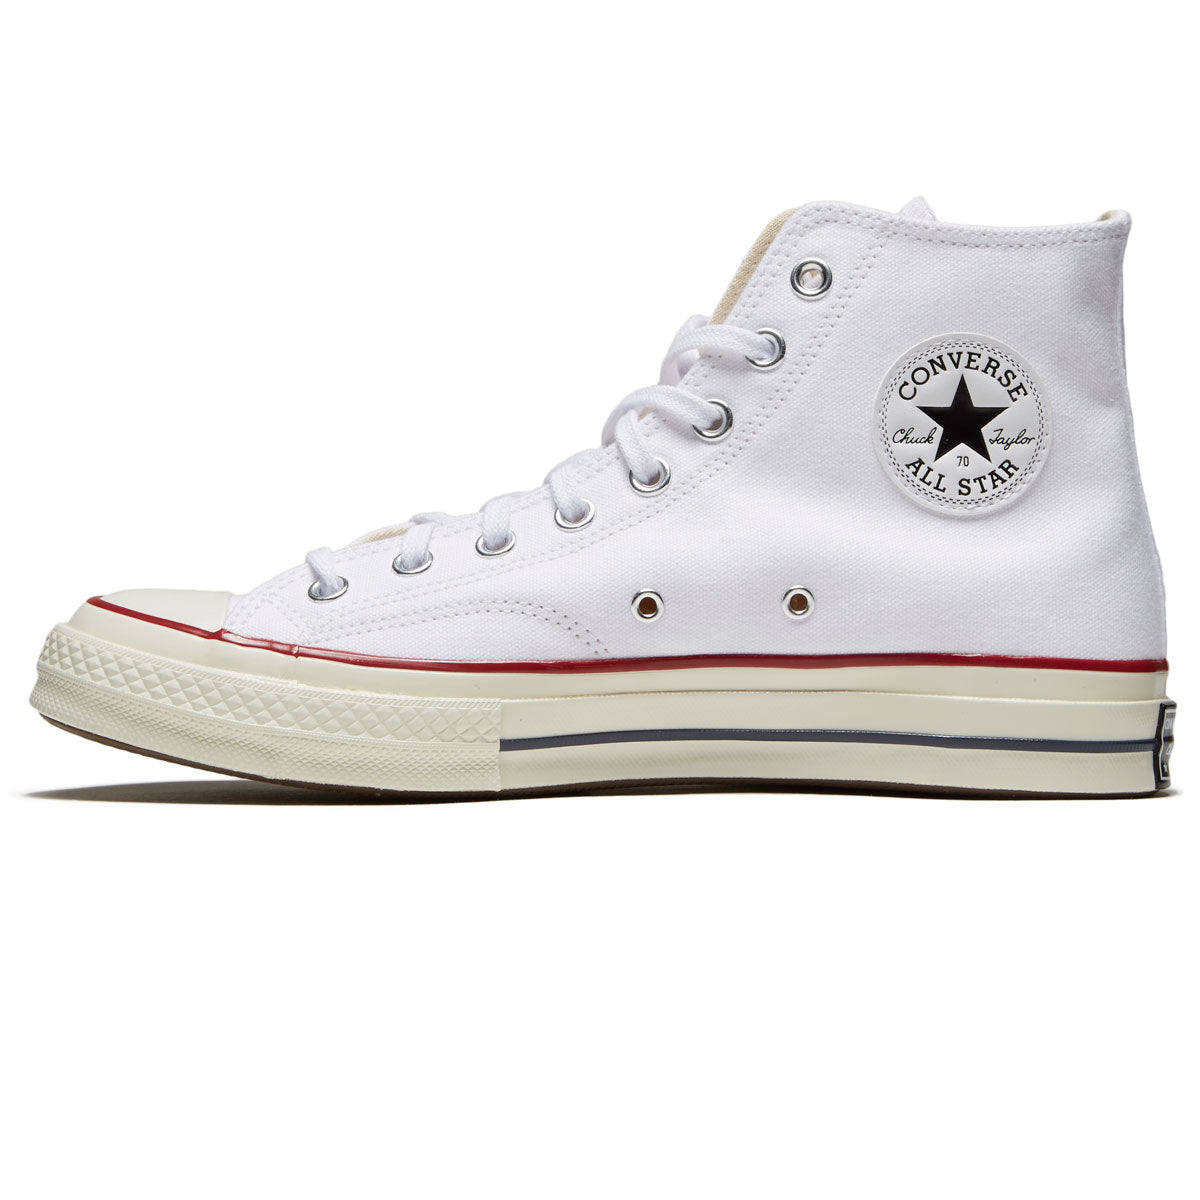 Converse Chuck 70 Hi Shoes - White/Garnet/Egret image 2